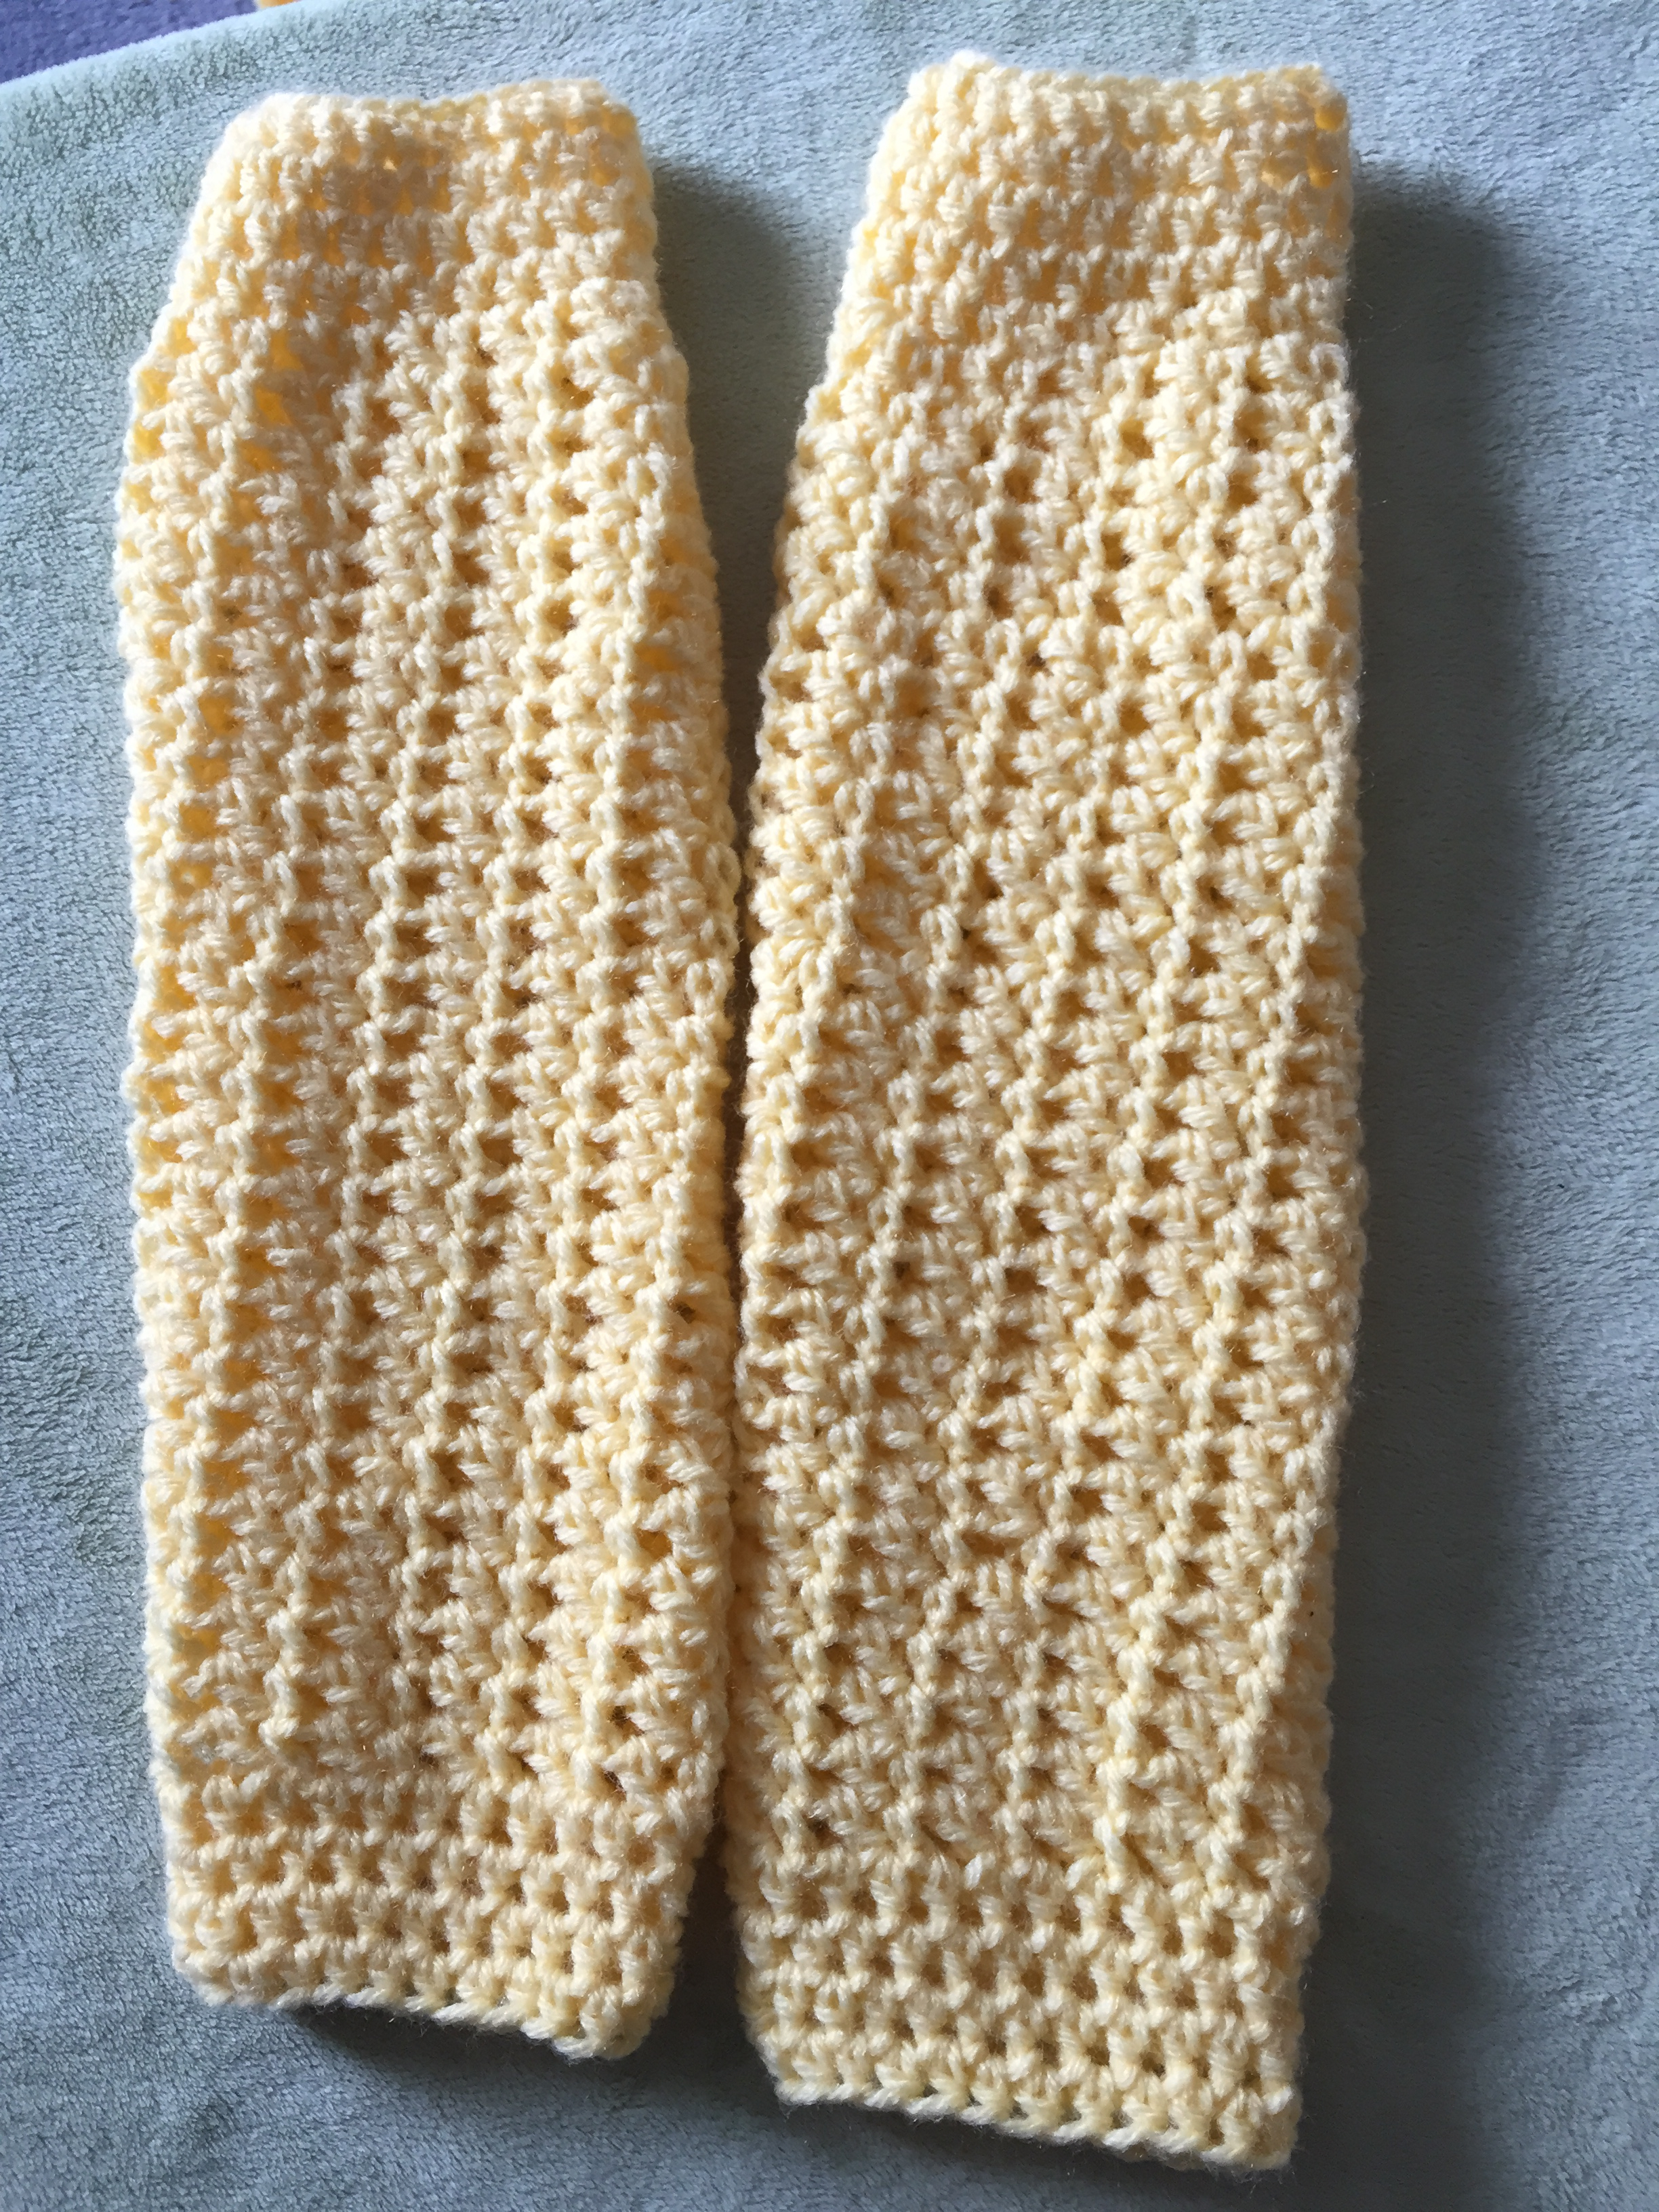 Leg Warmer Crochet Pattern Free Crochet Boot Cuffs Leg Warmers And More Free Patterns Diy From Home